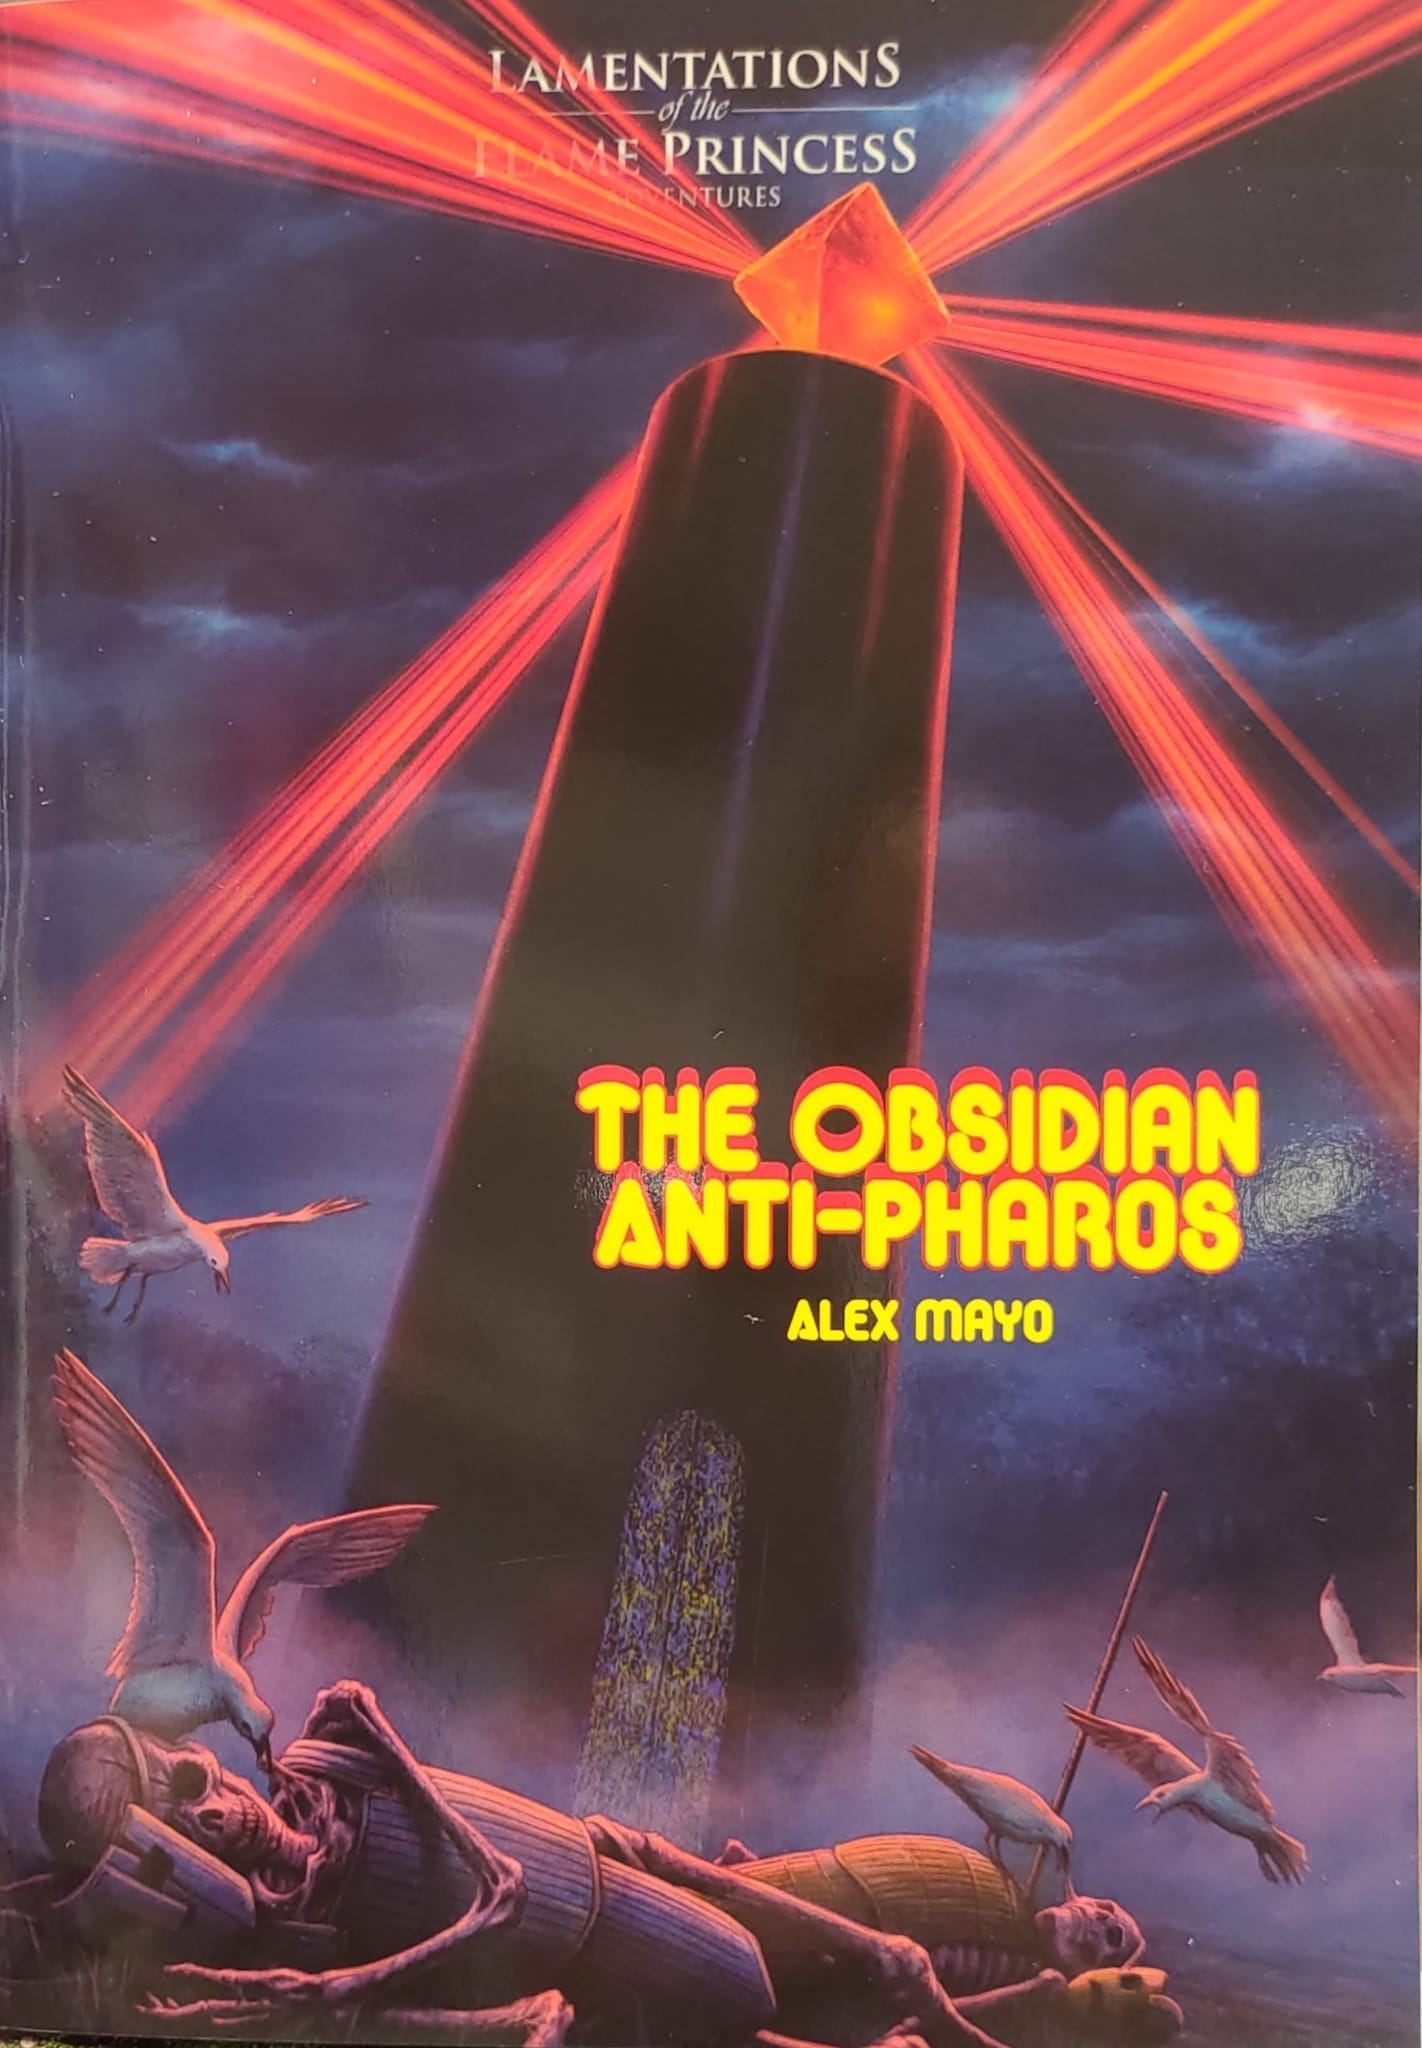 Lamentations Of The Flame Princess The Obsidian Anti-Pharos